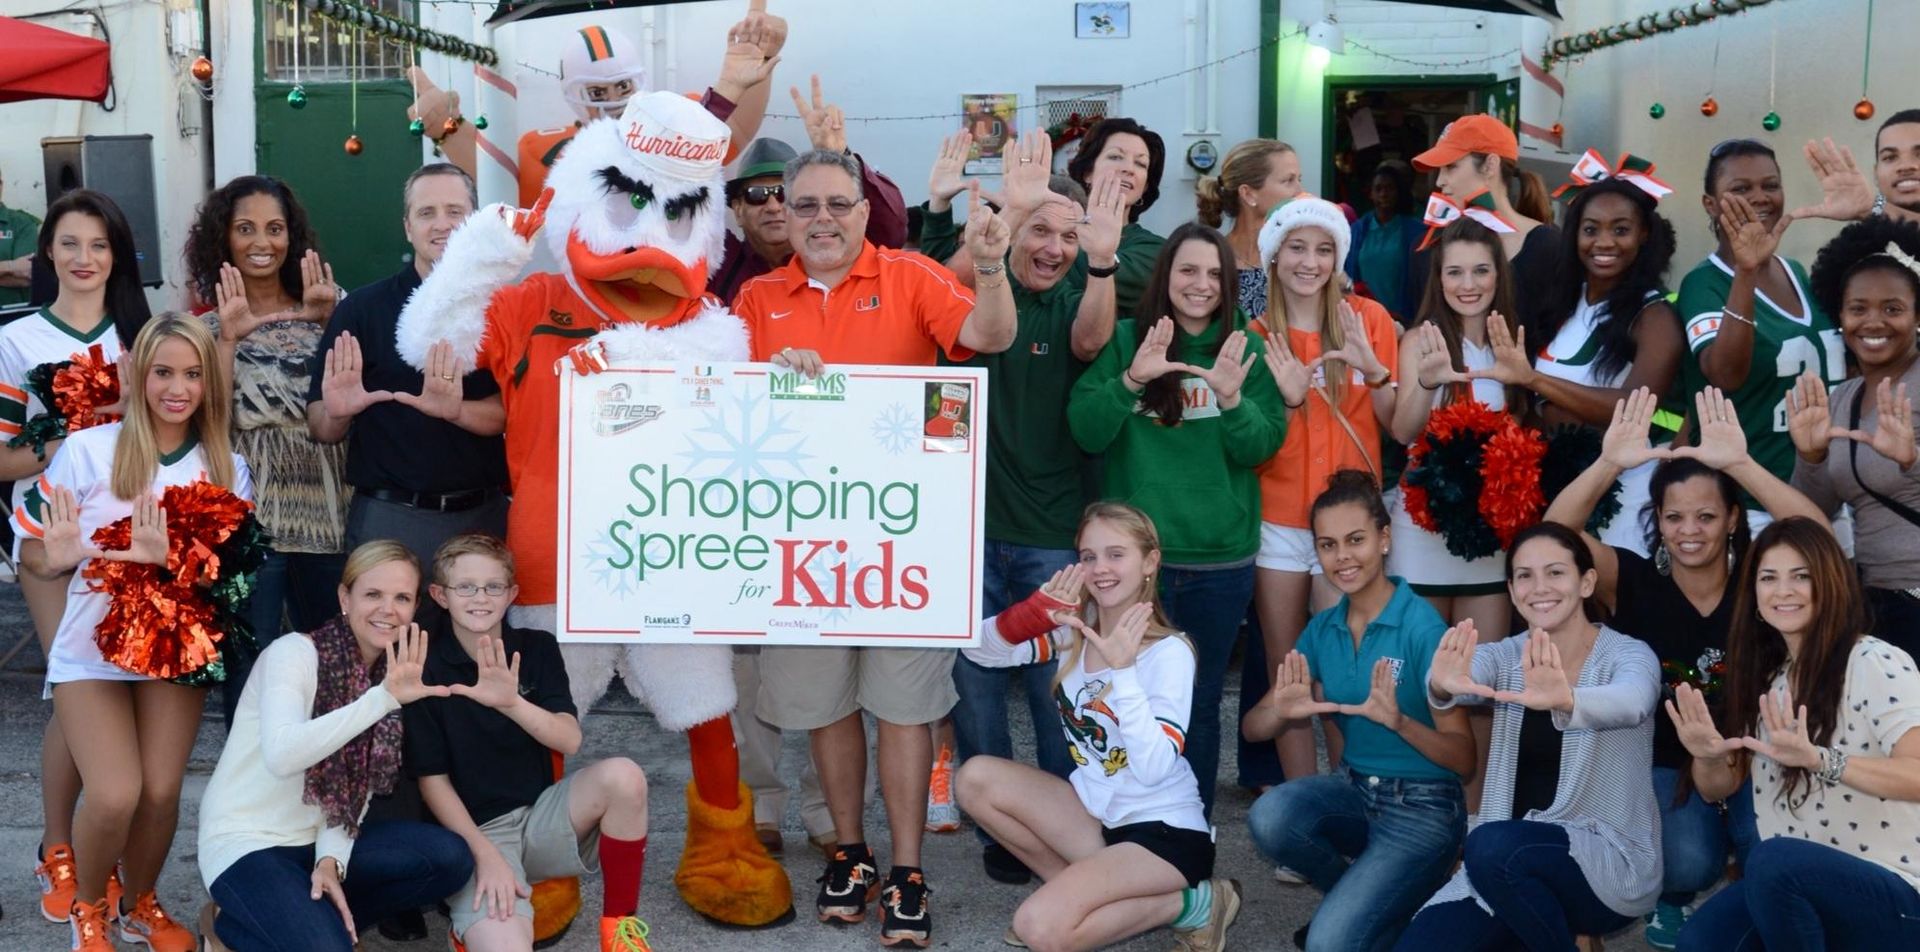 allCanes, Pata Fund Hosts Kids Shopping Spree